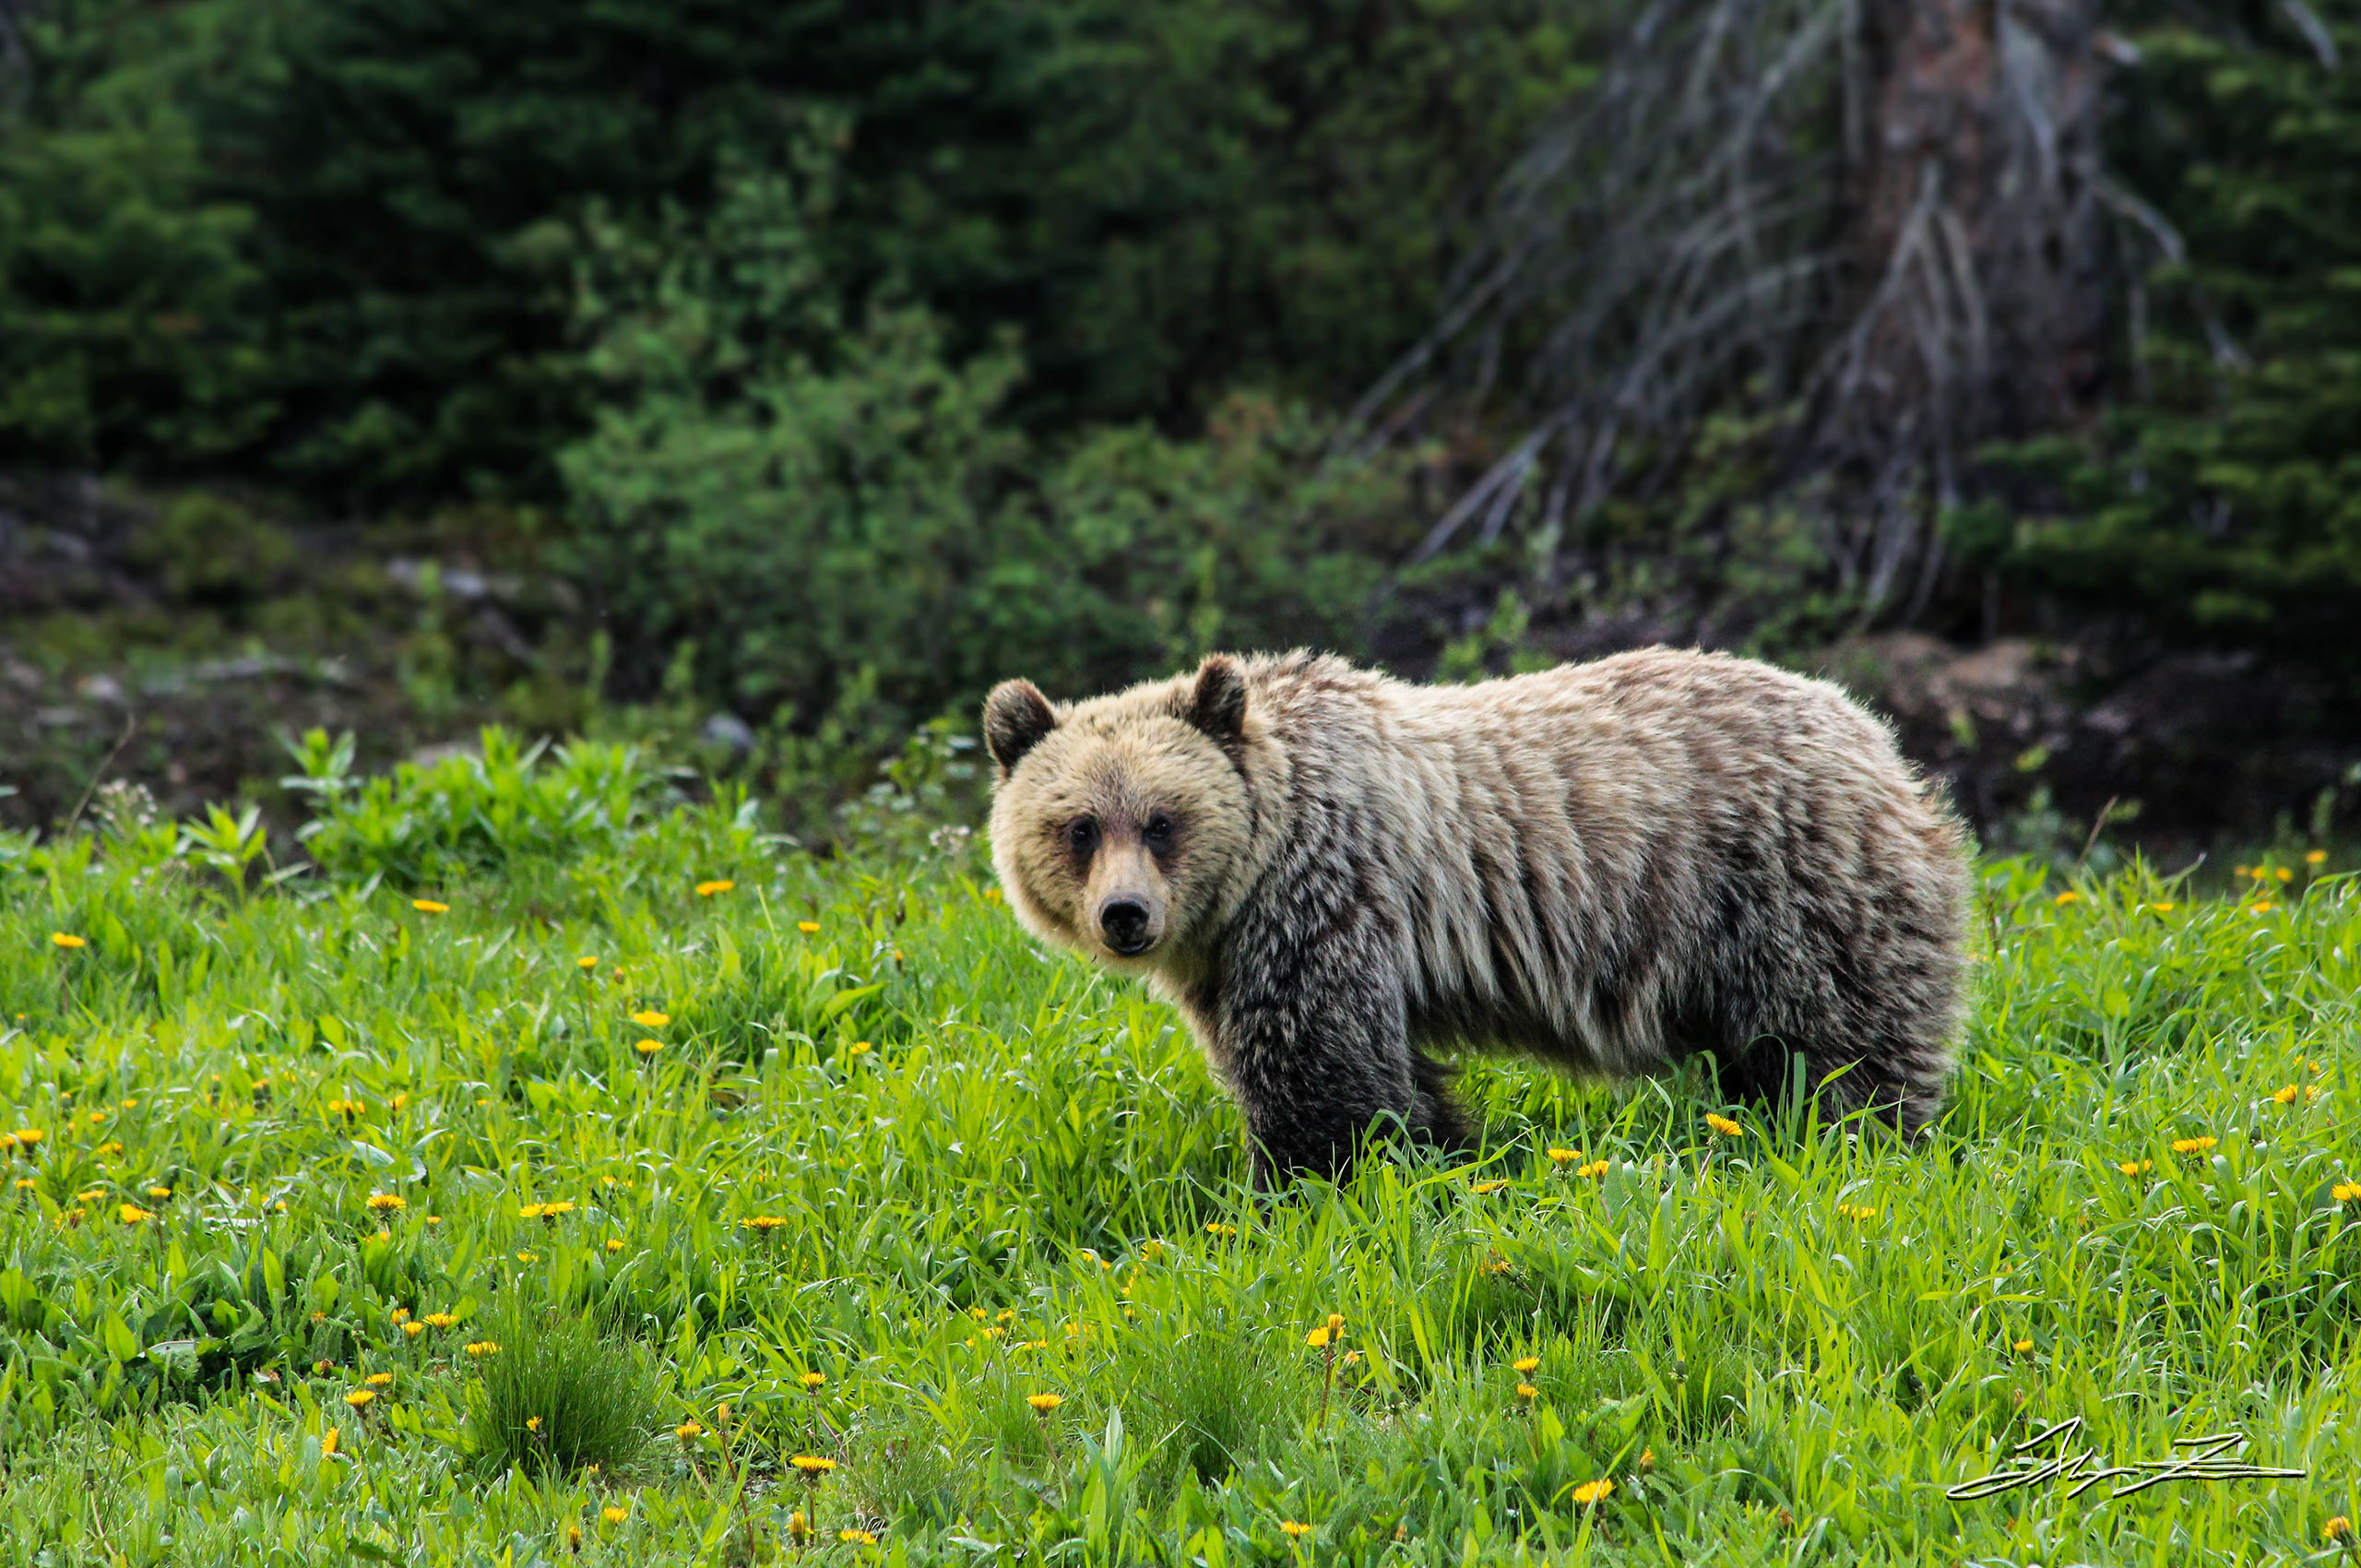 A grizzly bear, captured by photographer and DPUB student Alayna Fairman